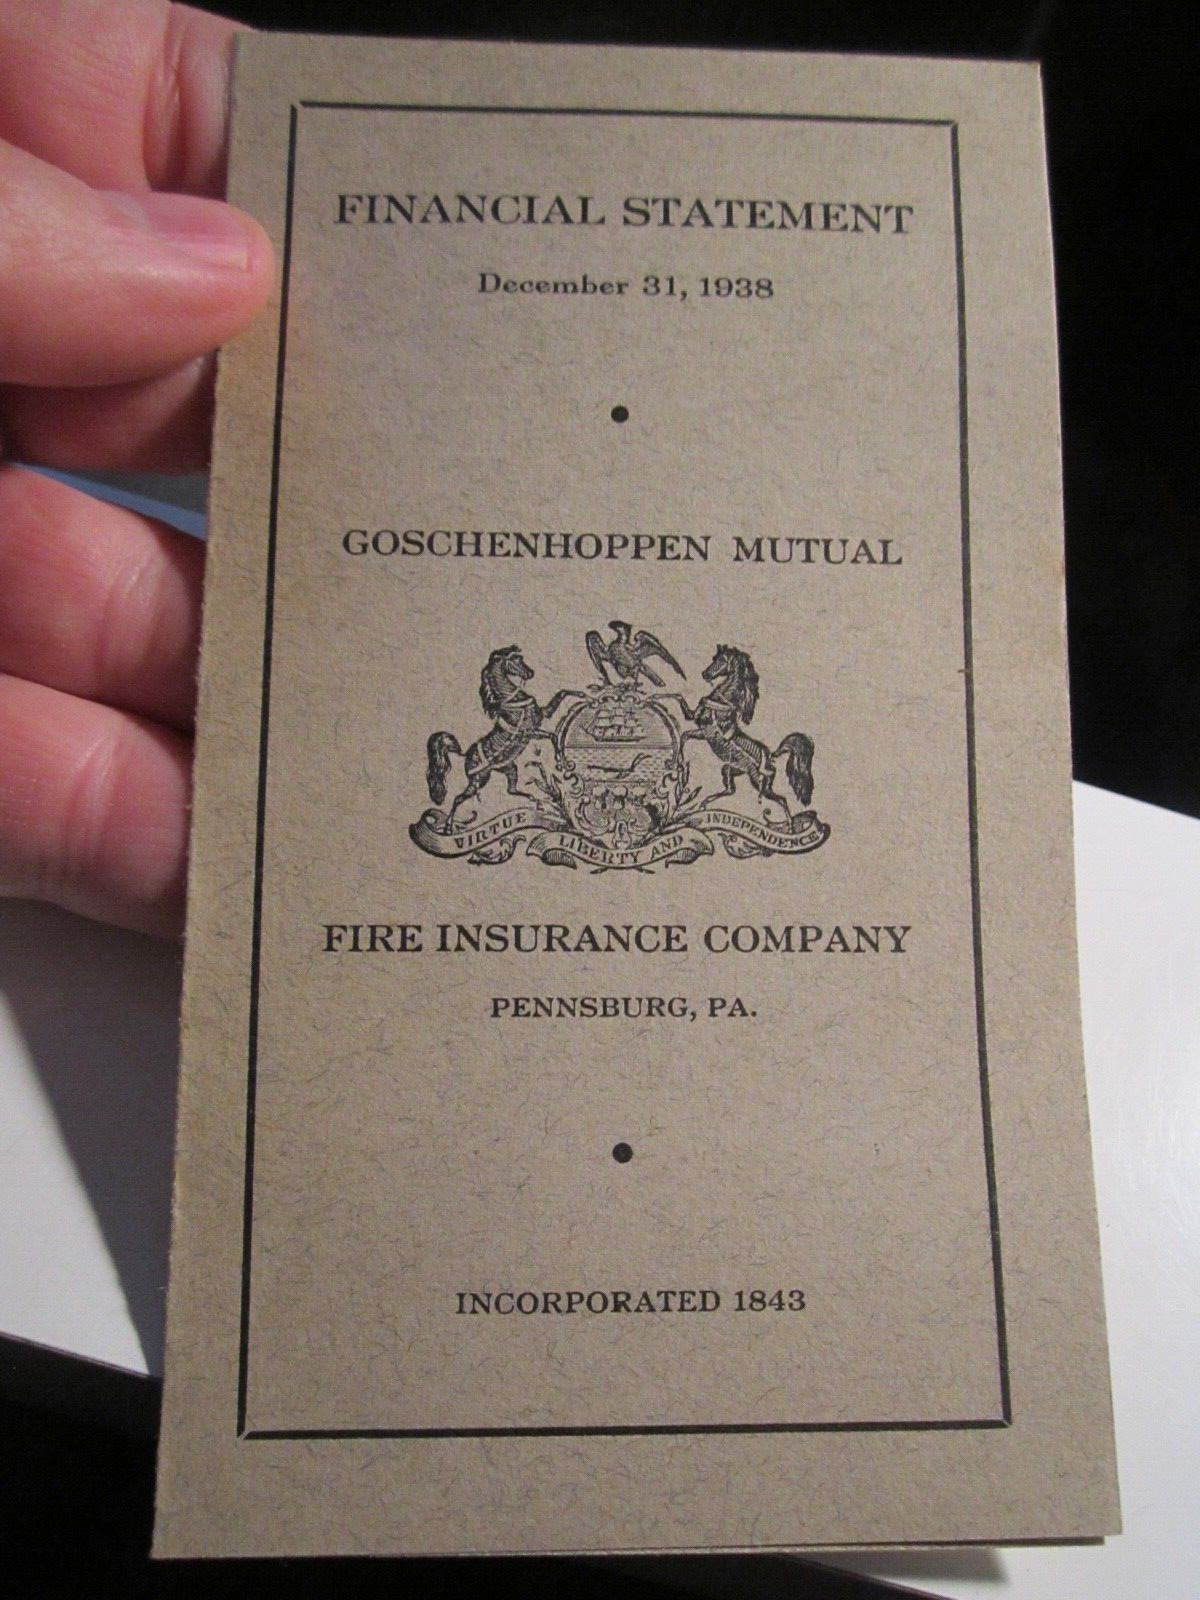 1938 GOSCHENHOPPEN MUTURAL FIRE INSURANCE COMPANY FINANCIAL STATEMENT - BBA-45